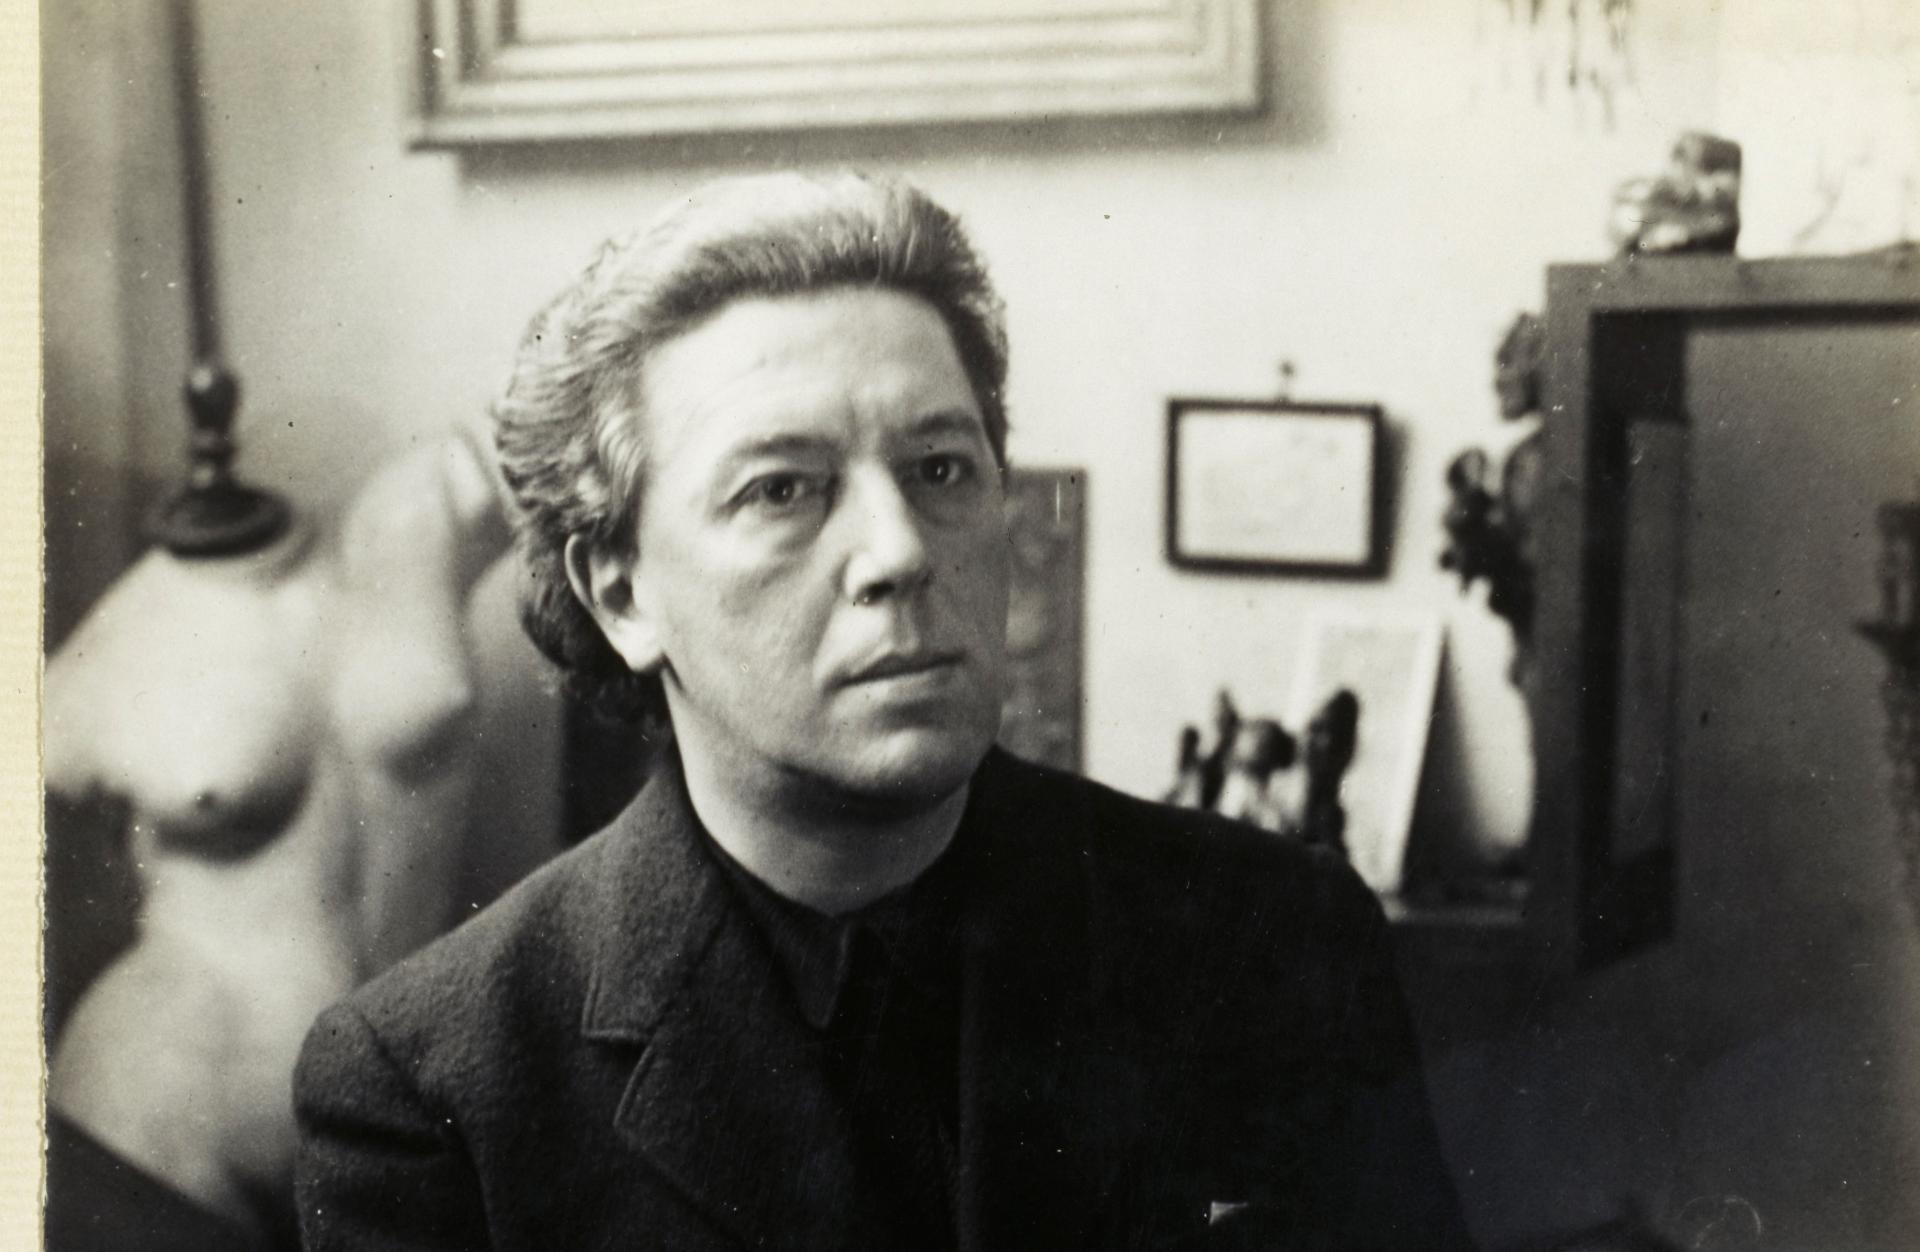 André Breton